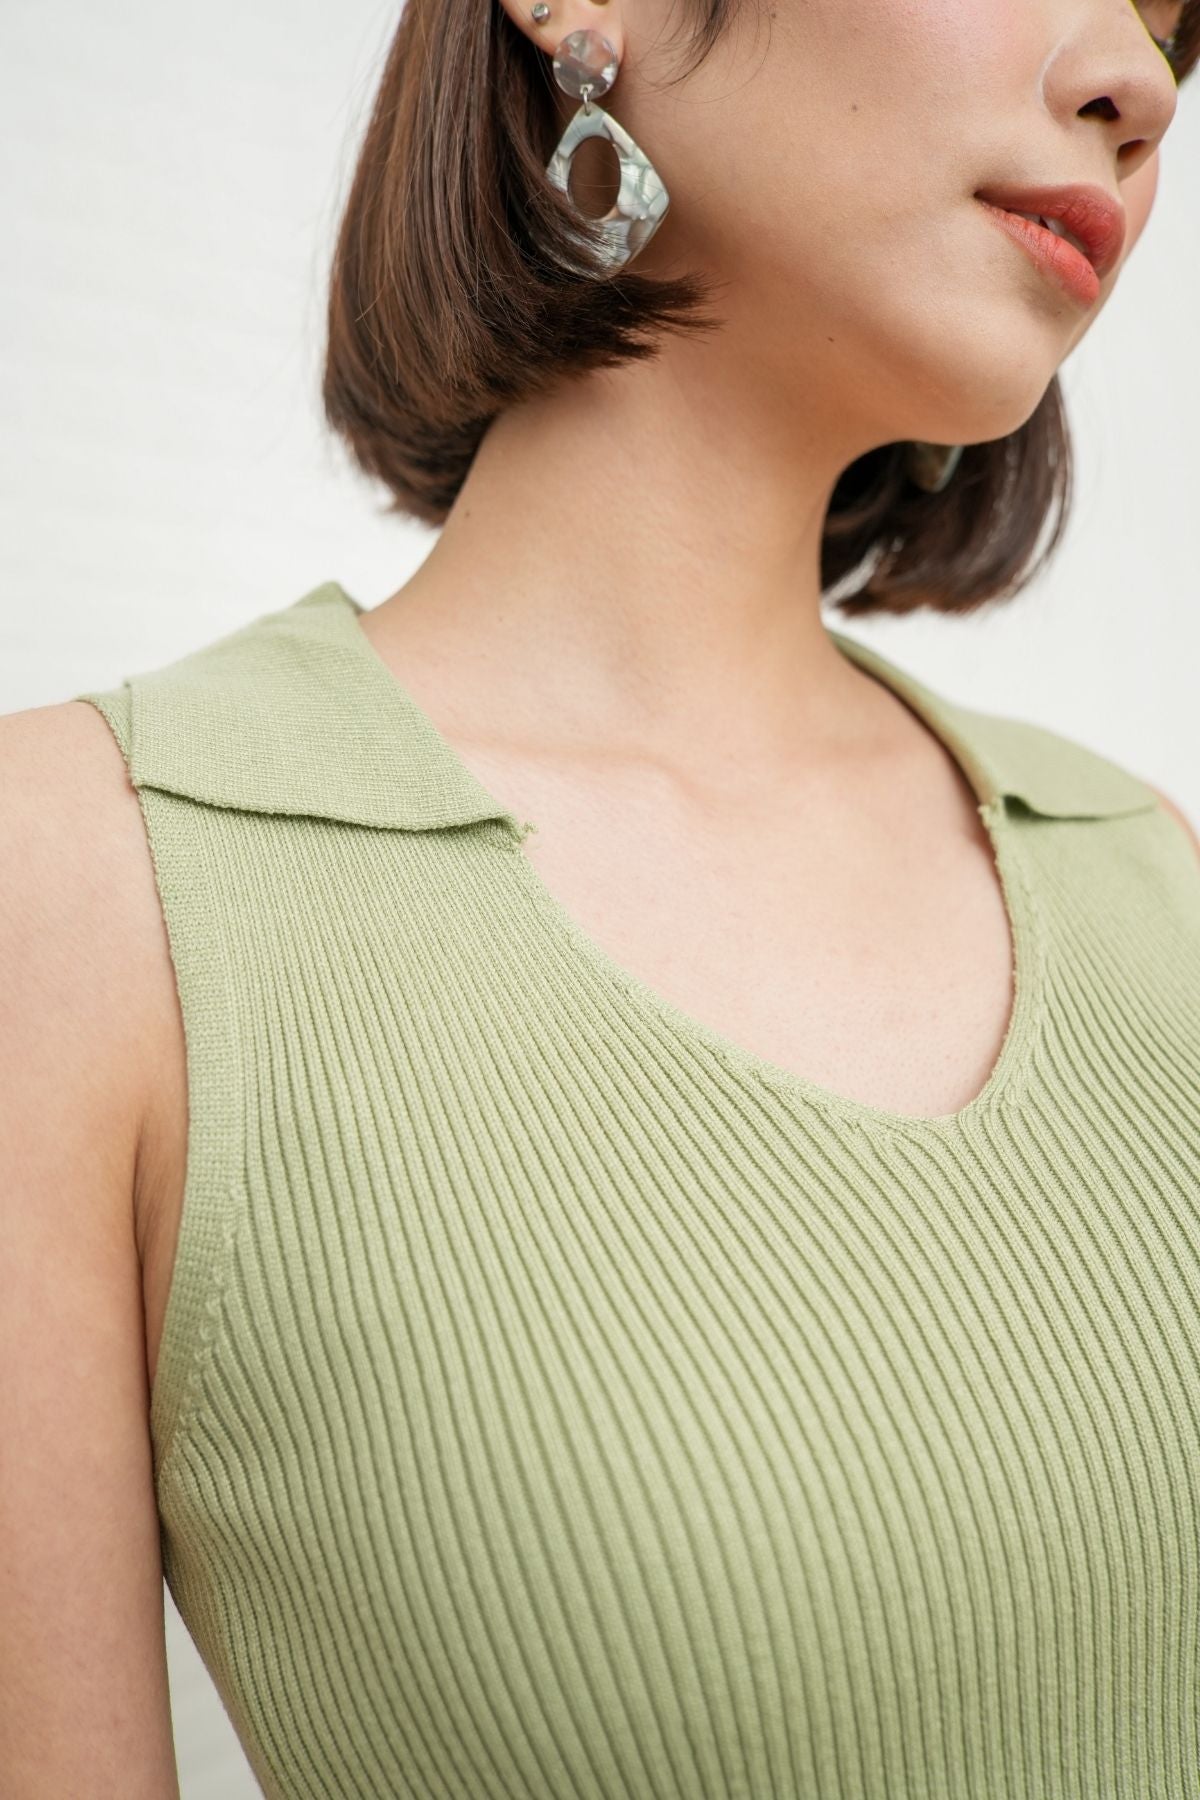 GIGI Sleeveless Collared Rib-Knit Top (Pistachio Green)